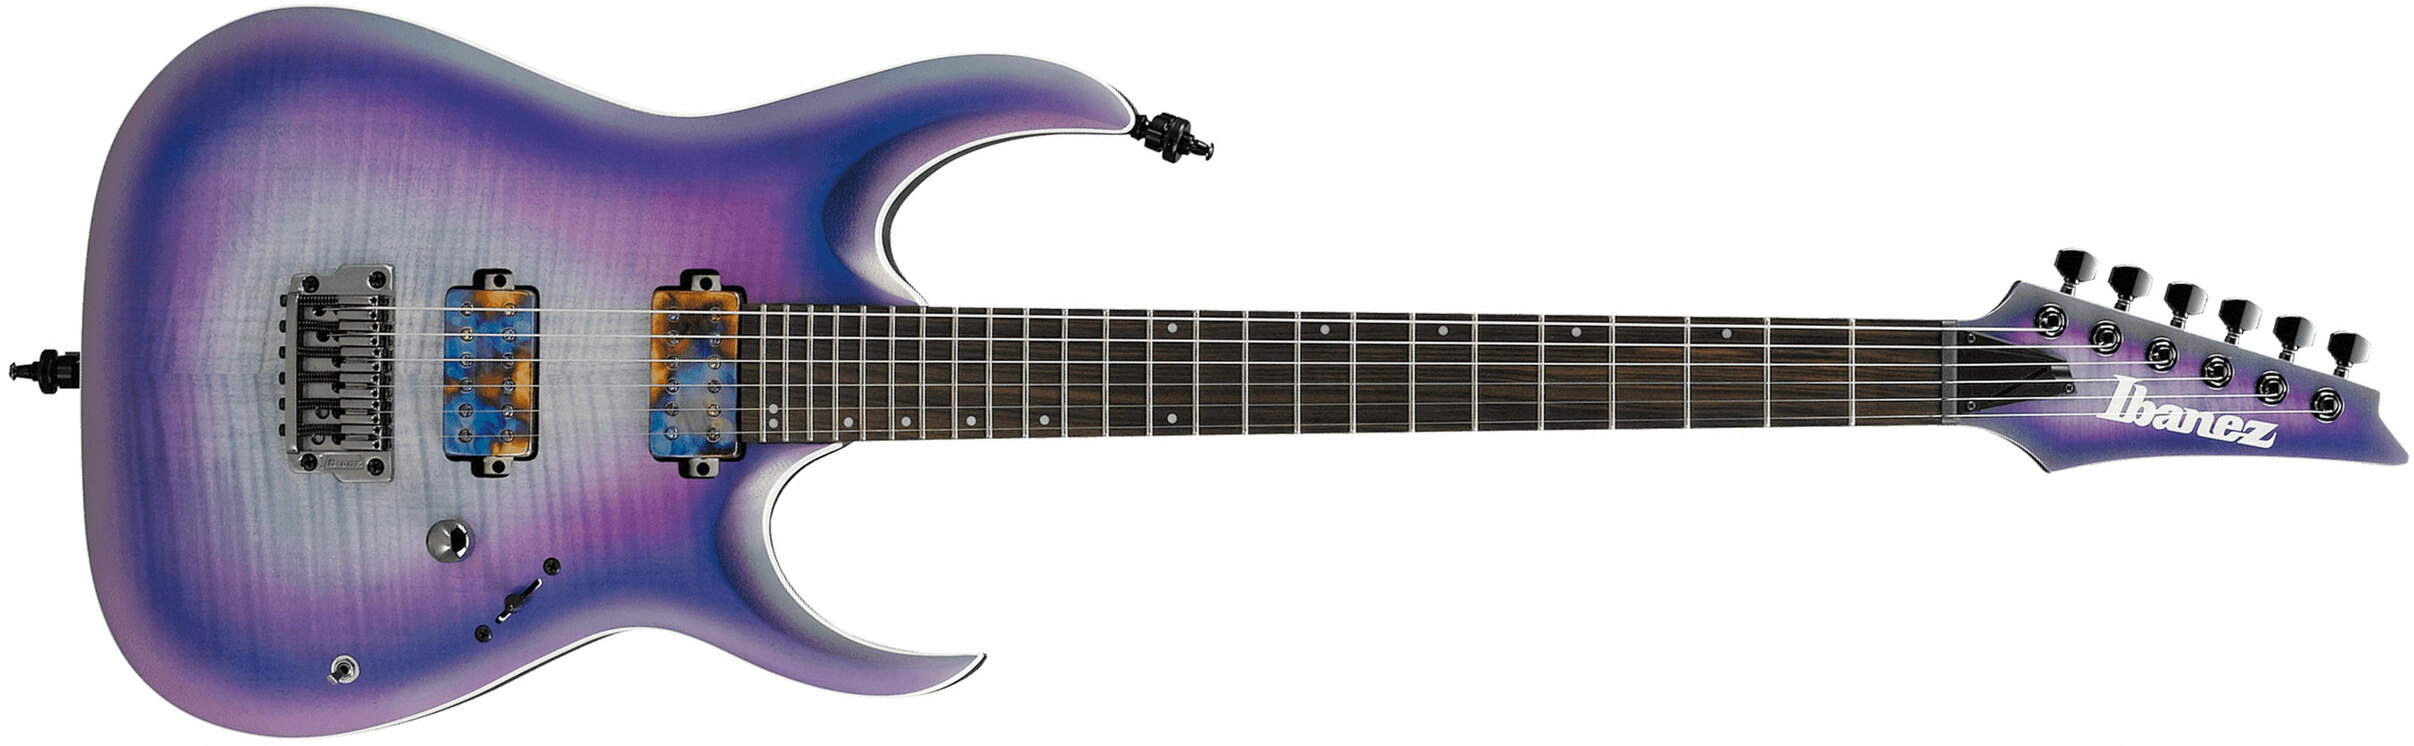 Ibanez Rga61al Iaf Axion Label Hh Bare Knuckle Ht Eb - Indigo Aurora Burst Flat - Metalen elektrische gitaar - Main picture